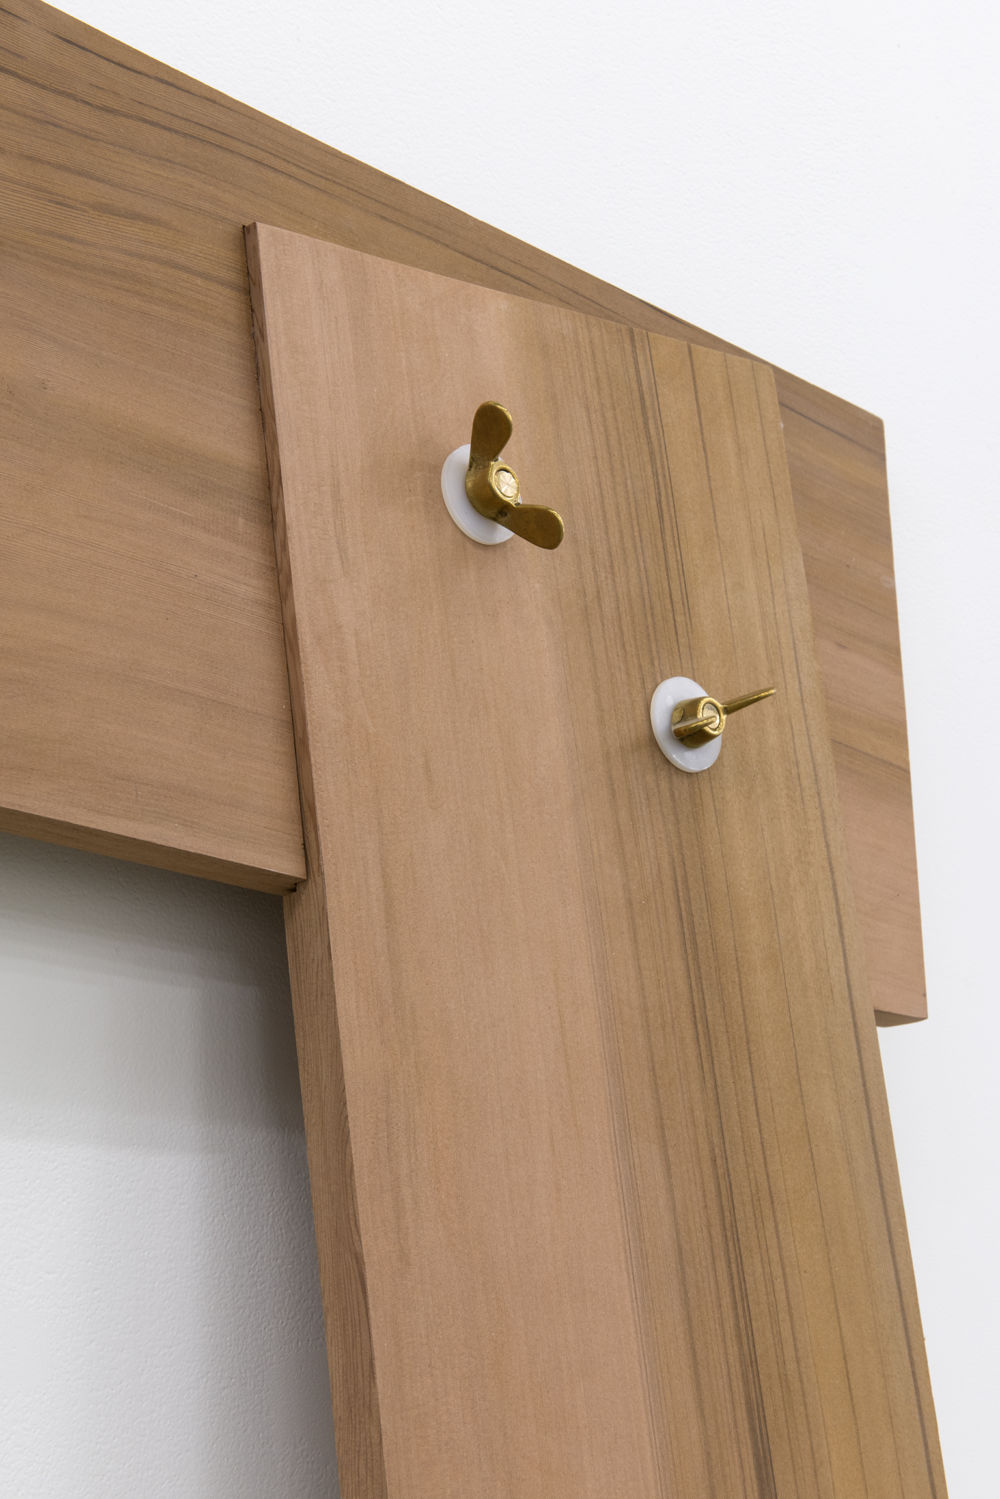 Christina Mackie, Lots/lost (detail), 2012, cedar, brass, nylon, 94 x 388 x 19 in. (238 x 986 x 48 cm) by 